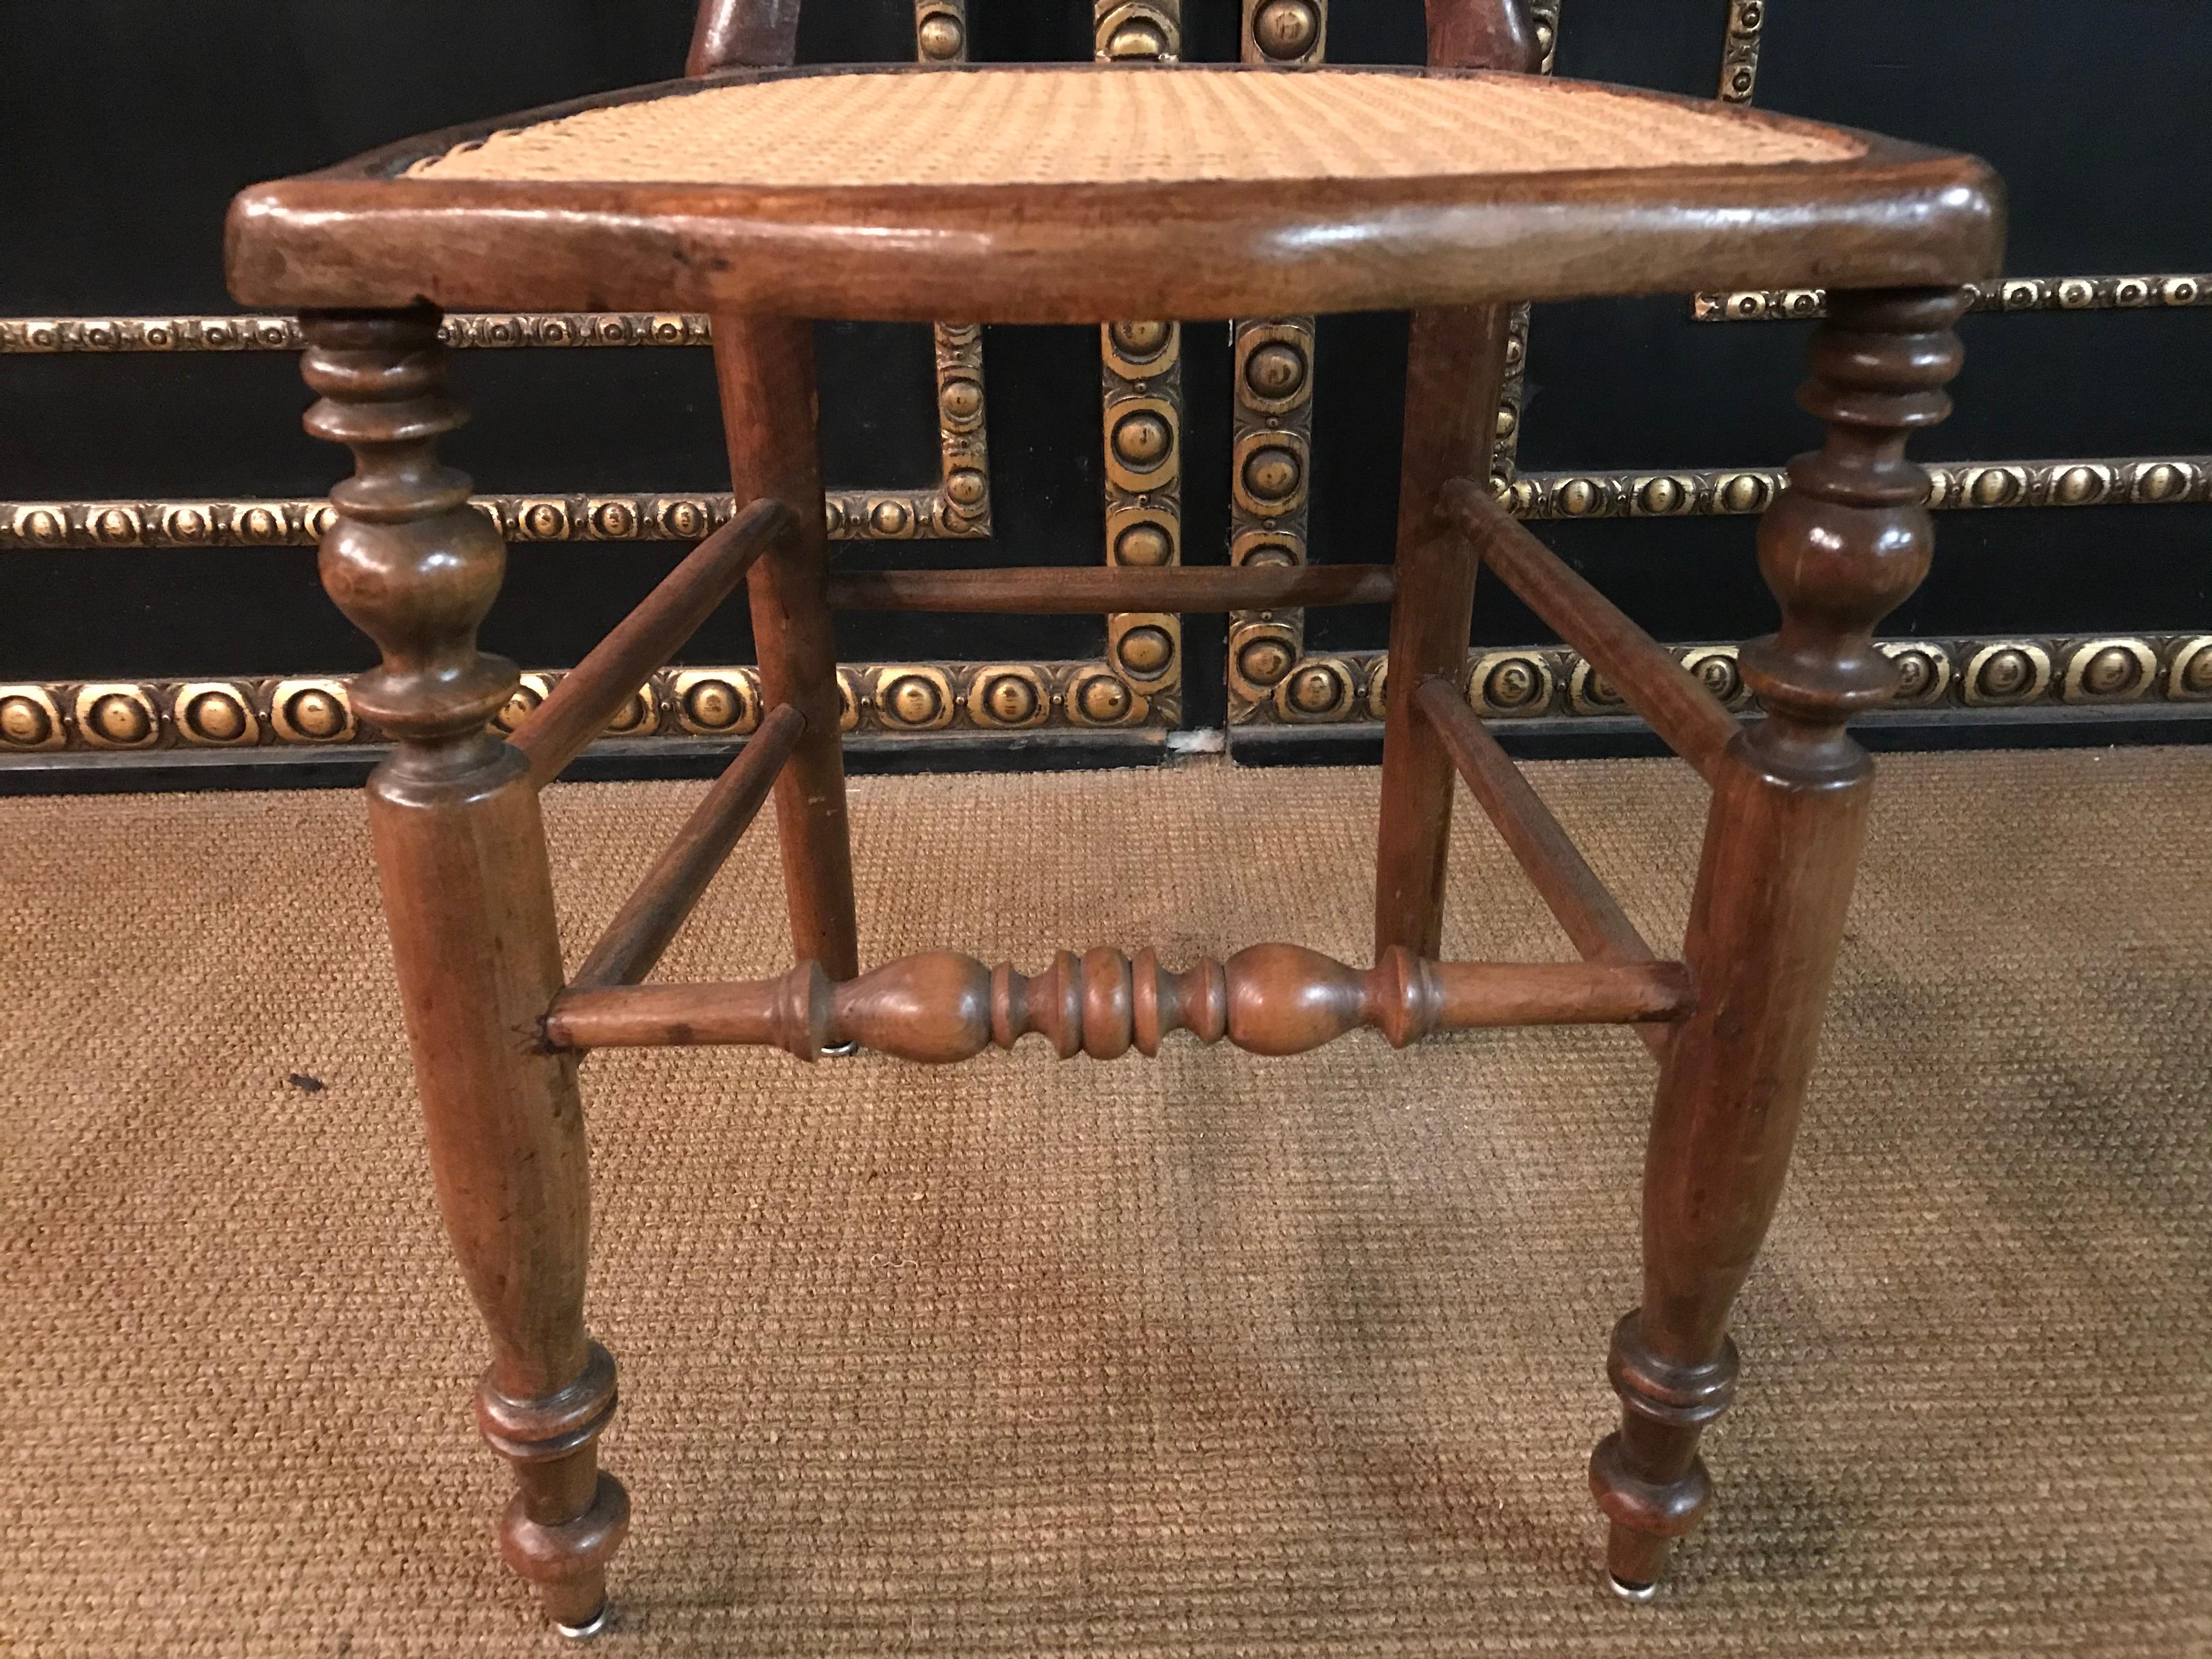 6 Original Biedermeier Chairs Caféhaus Seat Weave circa 1850-1860 Solid Mahogany For Sale 9